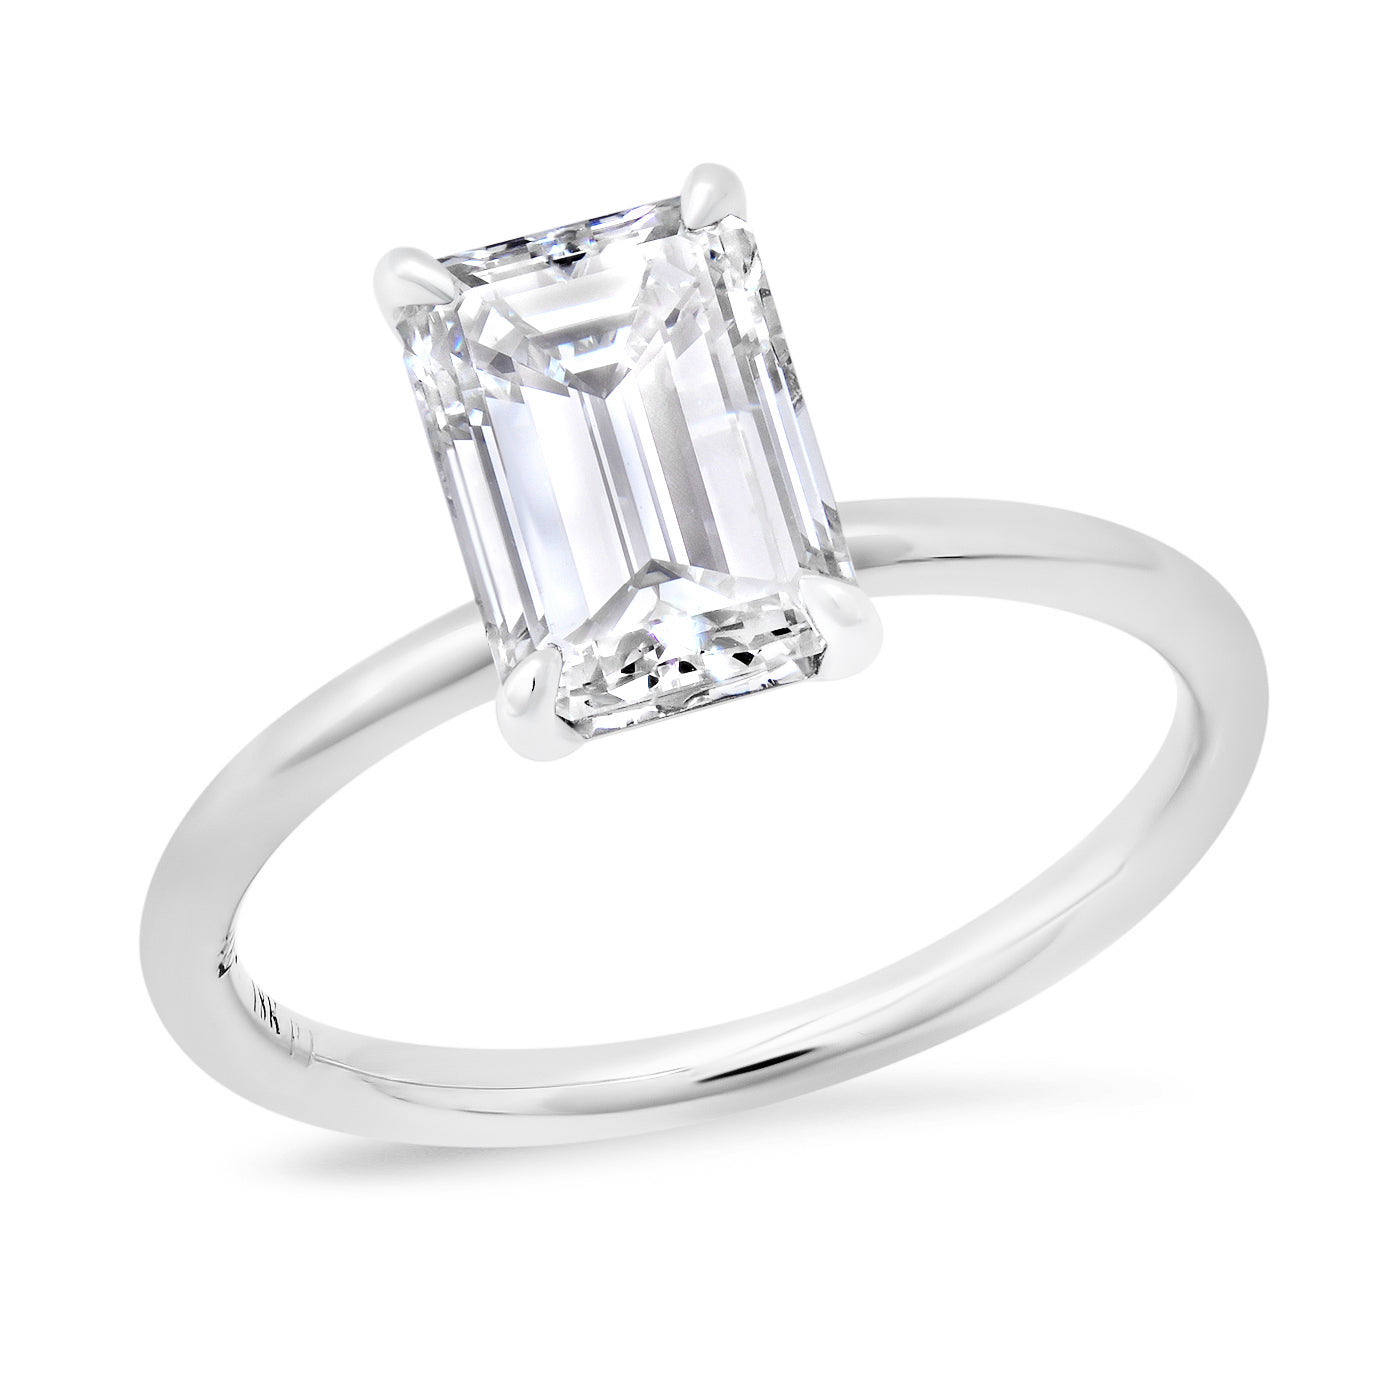 Sold - 2.02 Carat Emerald Cut Engagement Ring